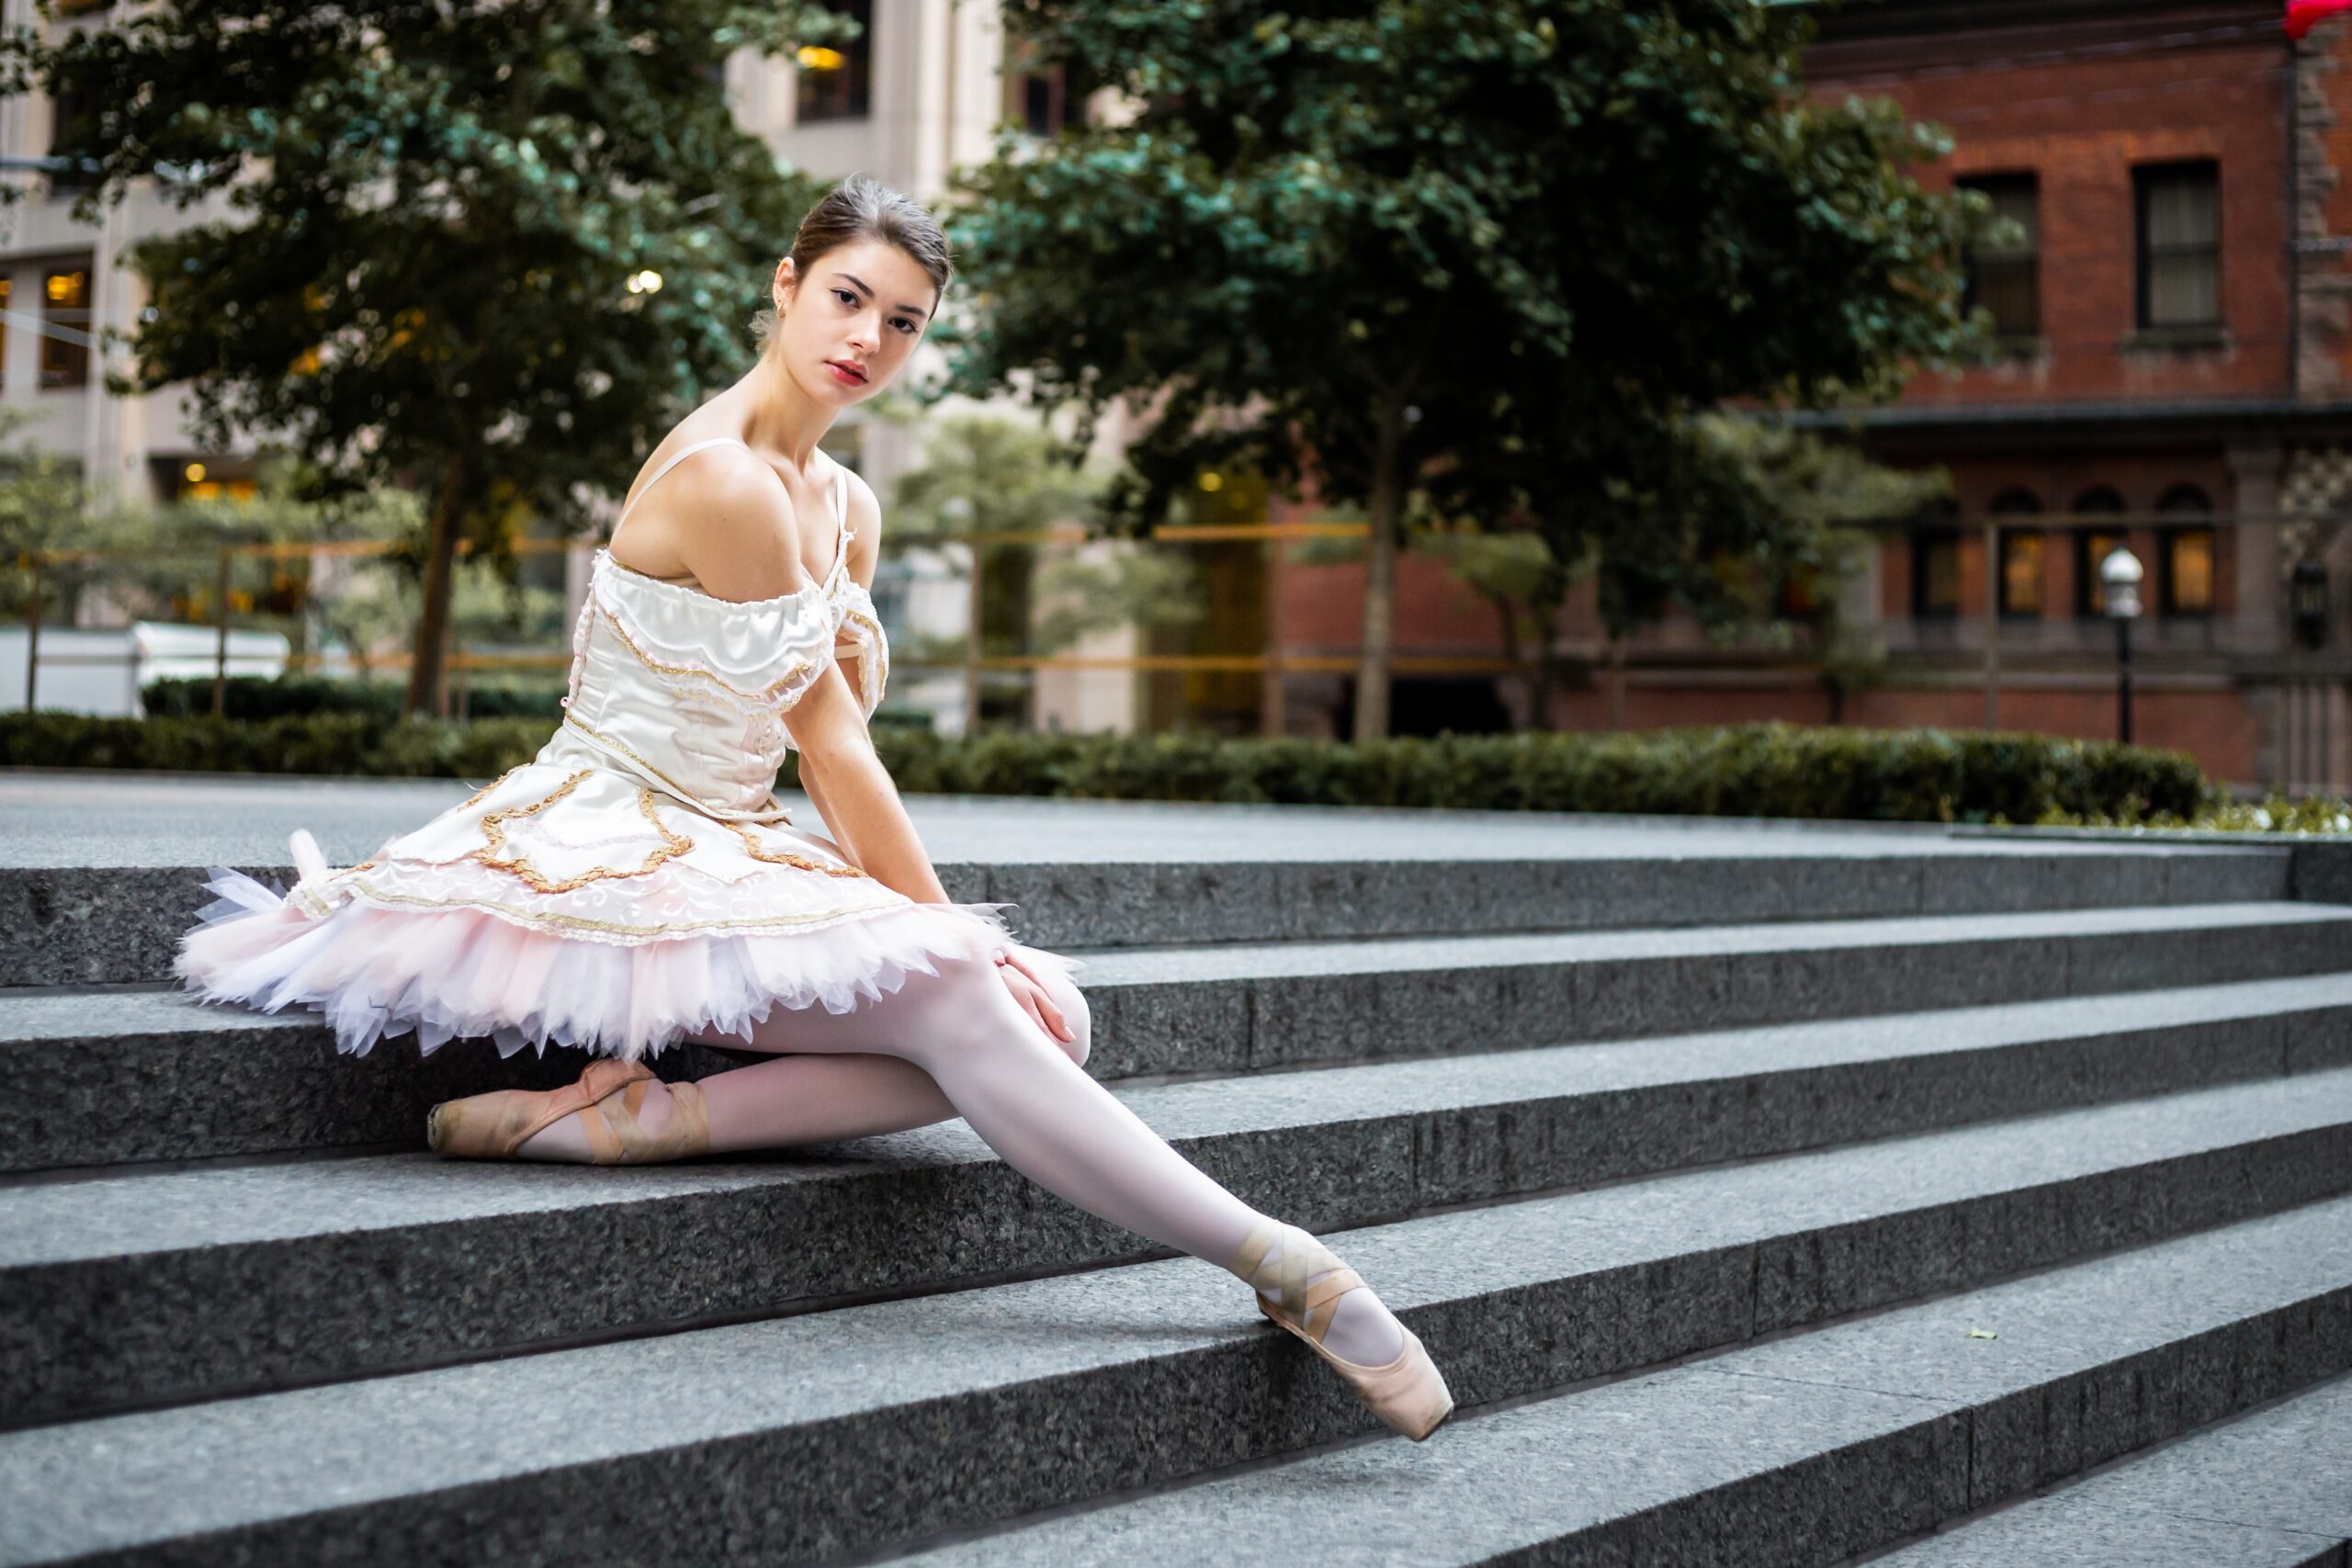 female ballerina posing outdoors in her dance costume